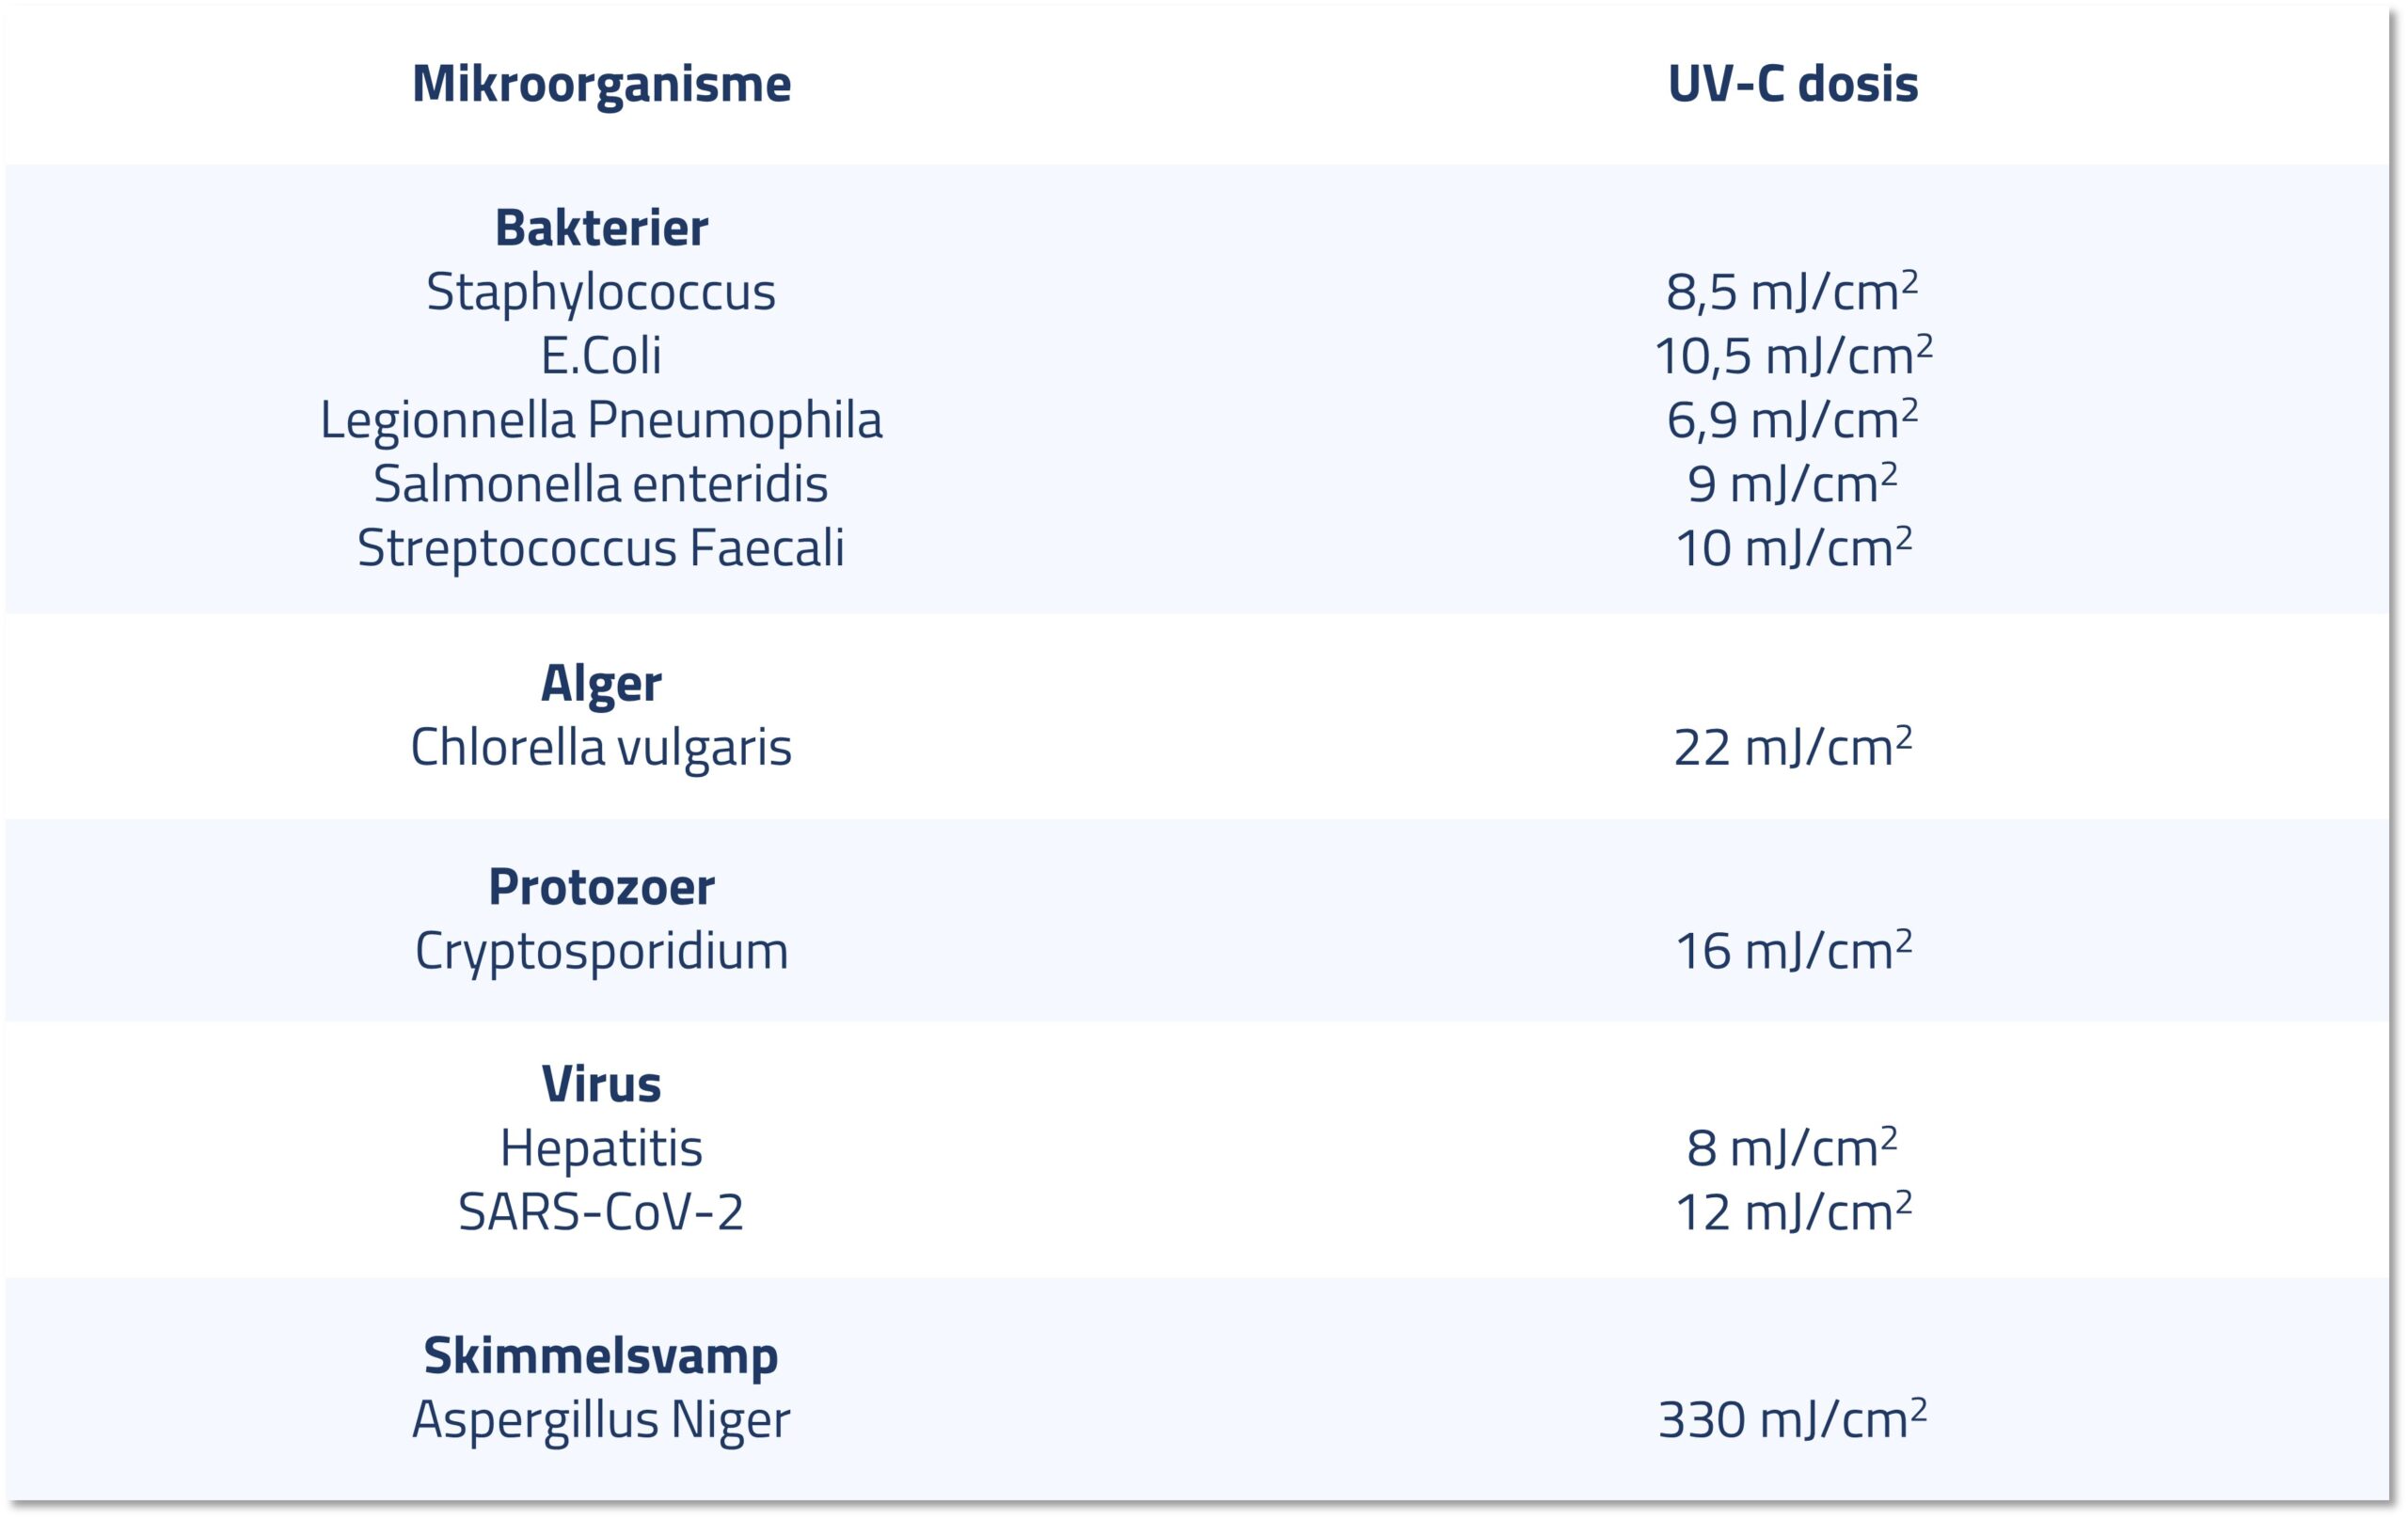 UV-C doser